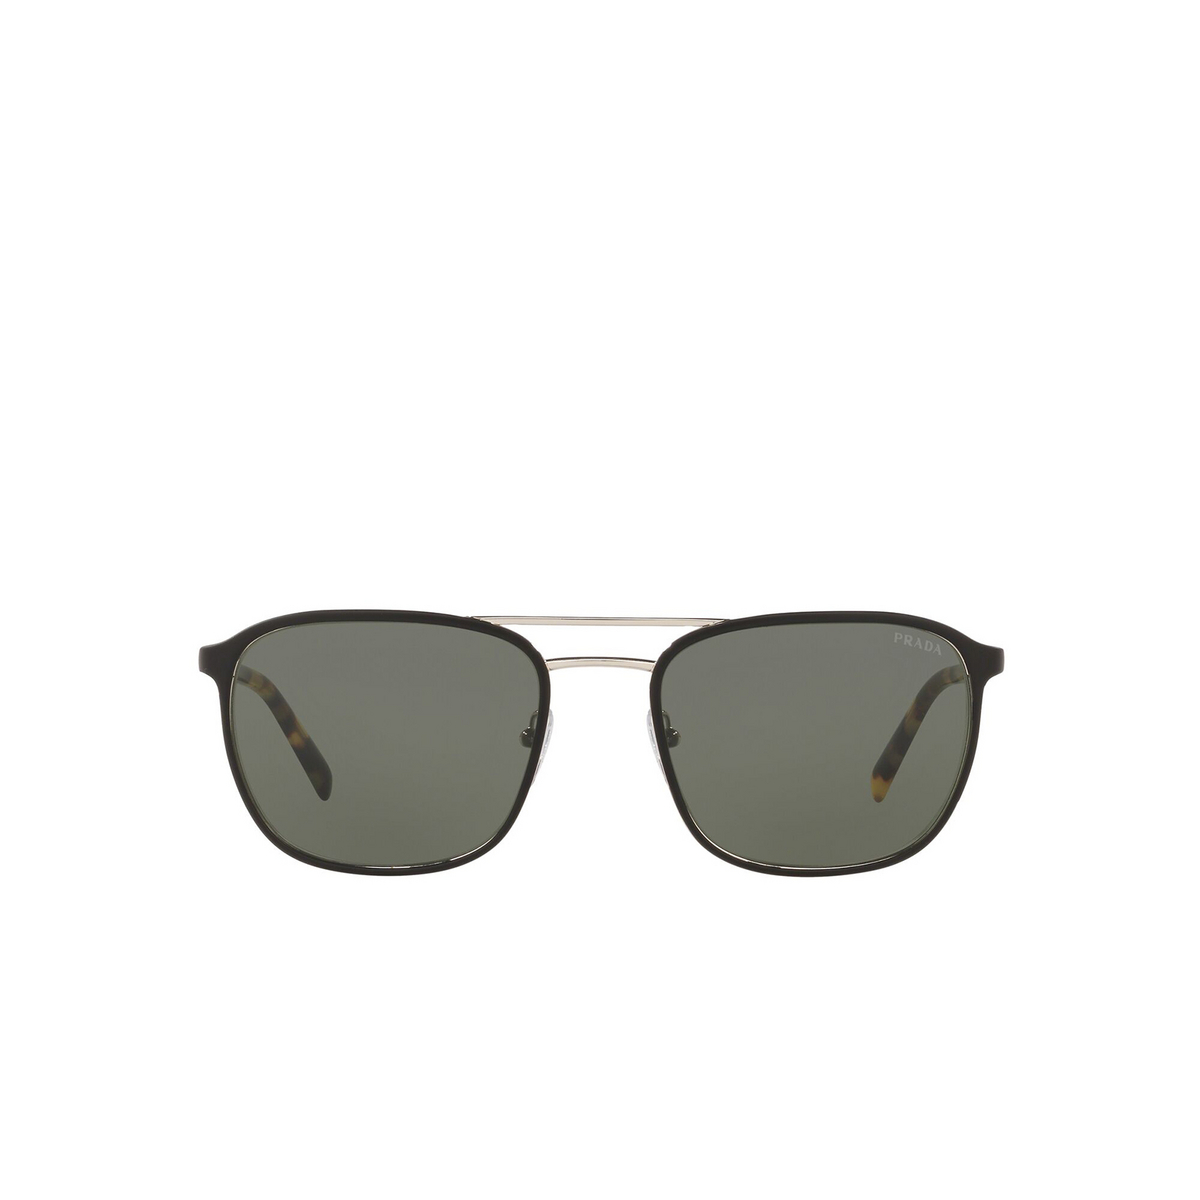 Prada PR 75VS Sunglasses 5240B2 Top Matte Black on Silver - front view